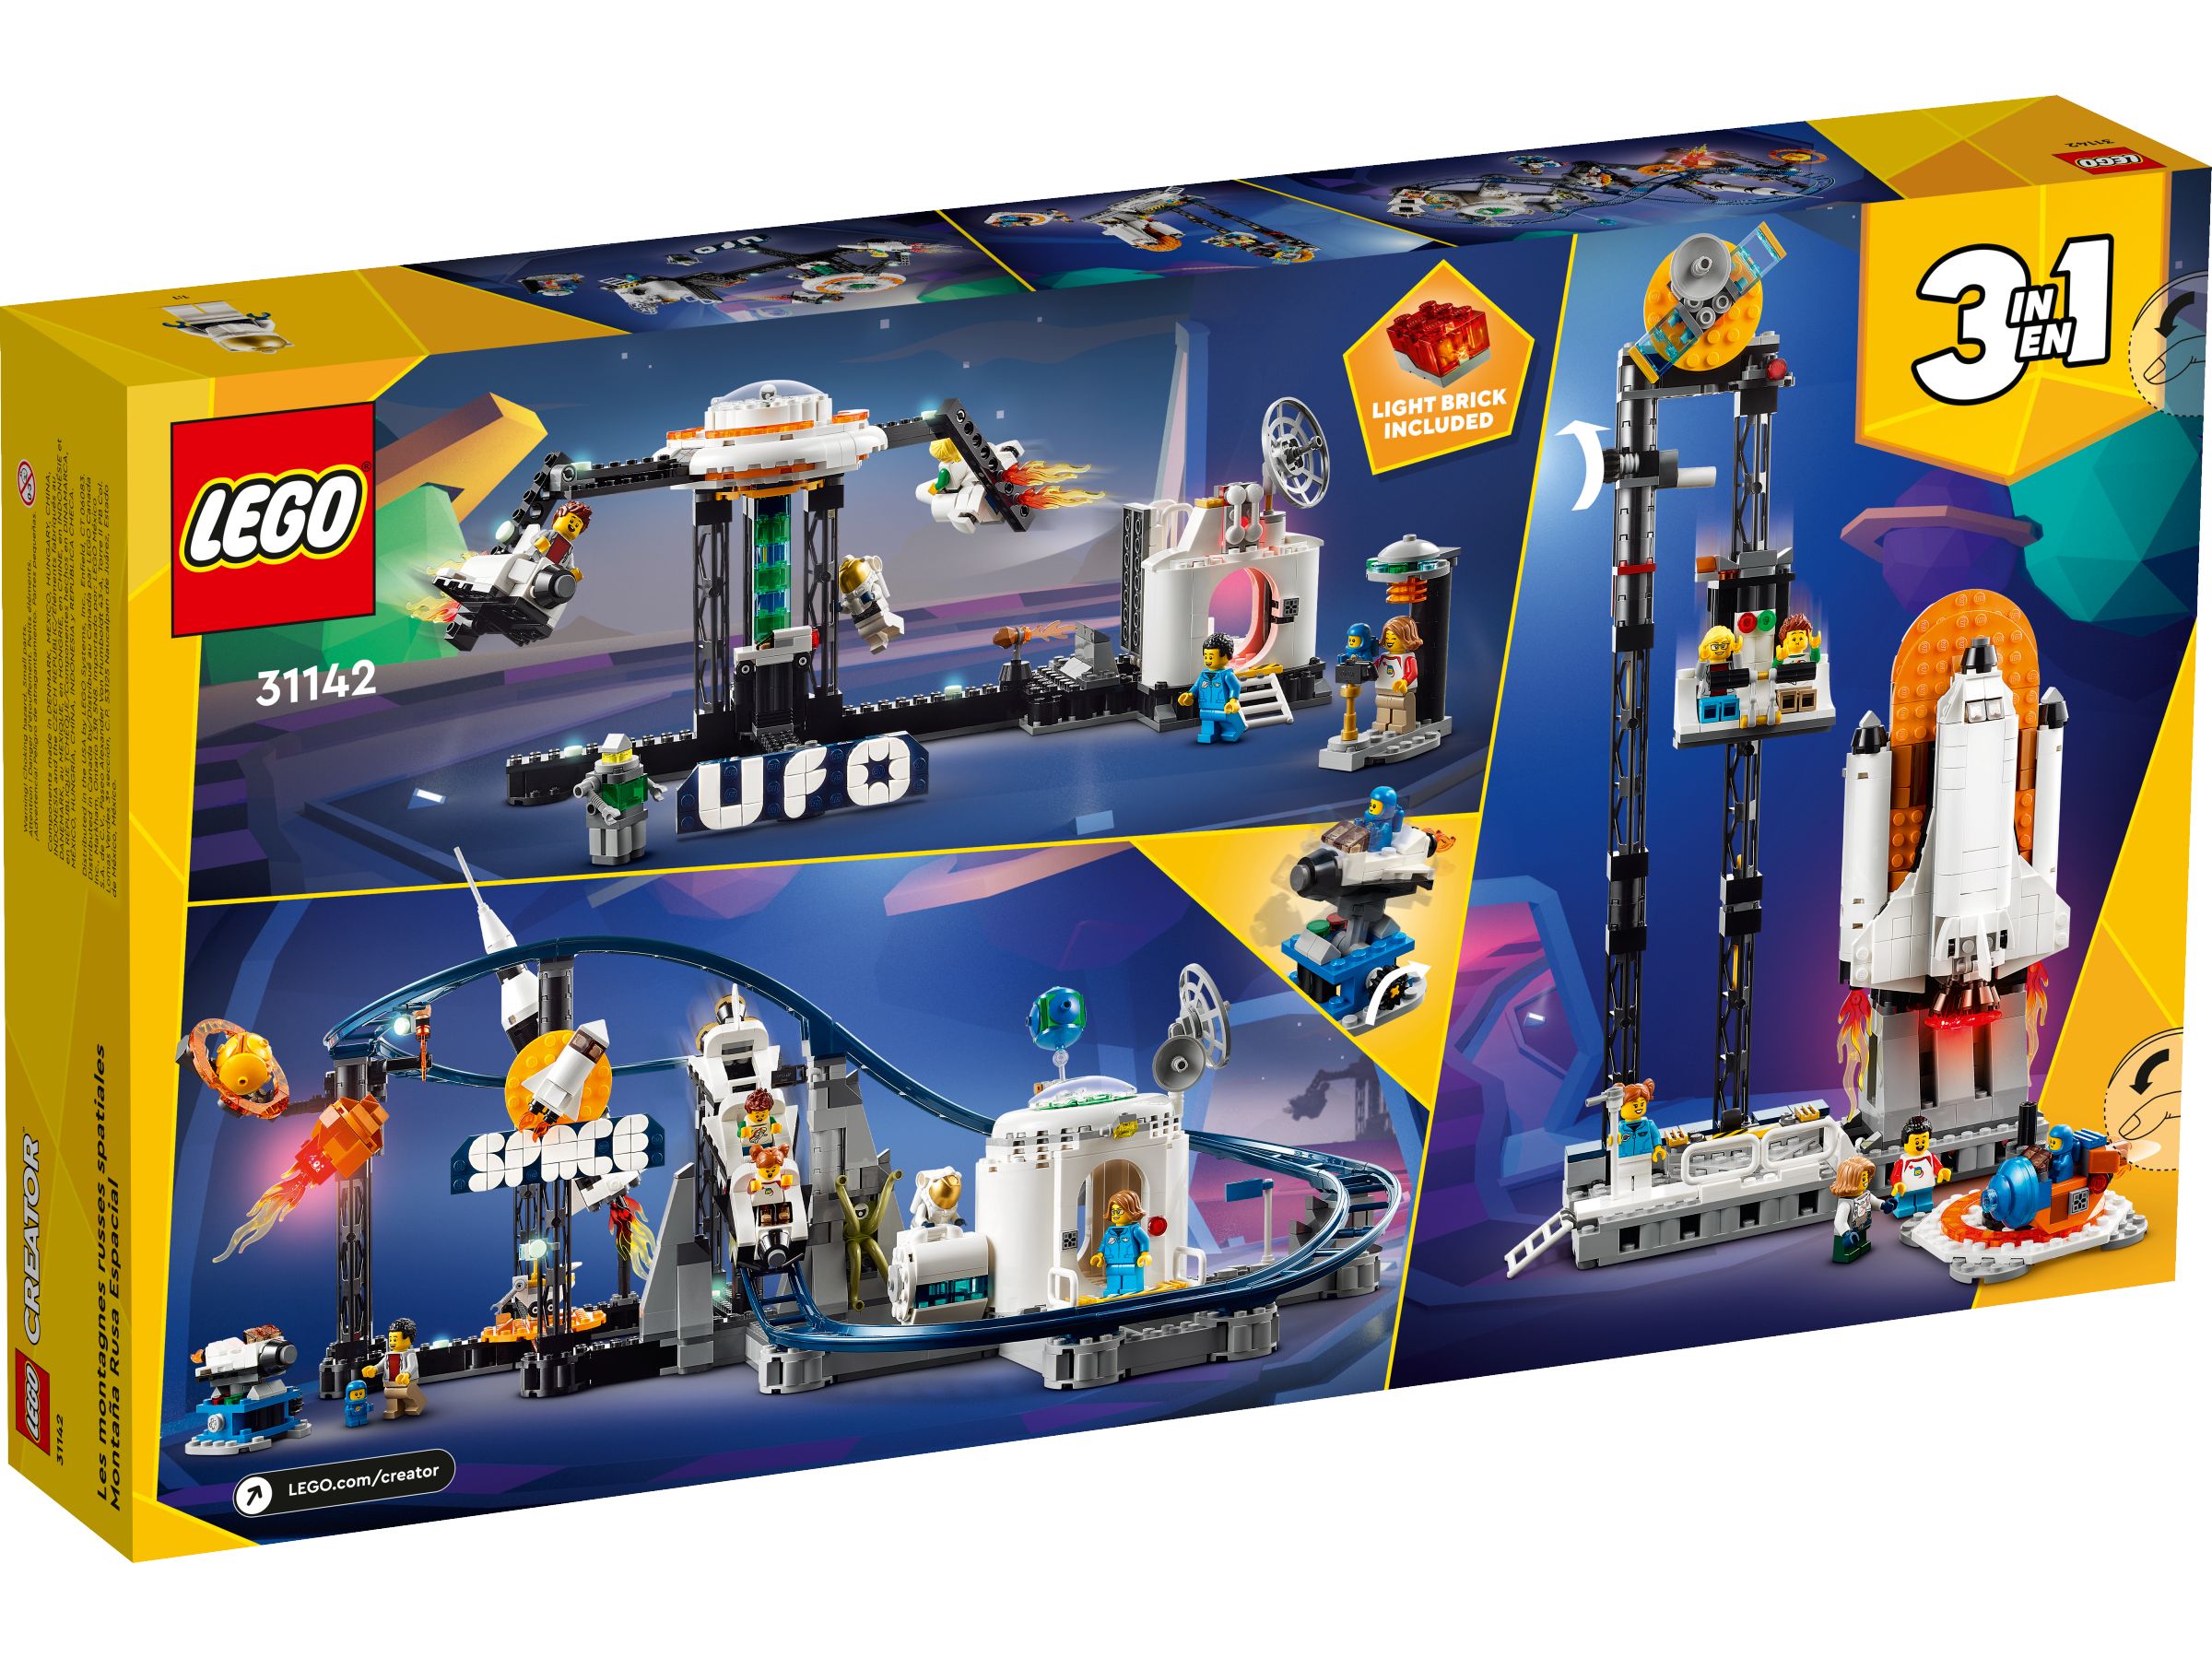 LEGO Creator 31142 Weltraum-Achterbahn LEGO_31142_alt2.jpg